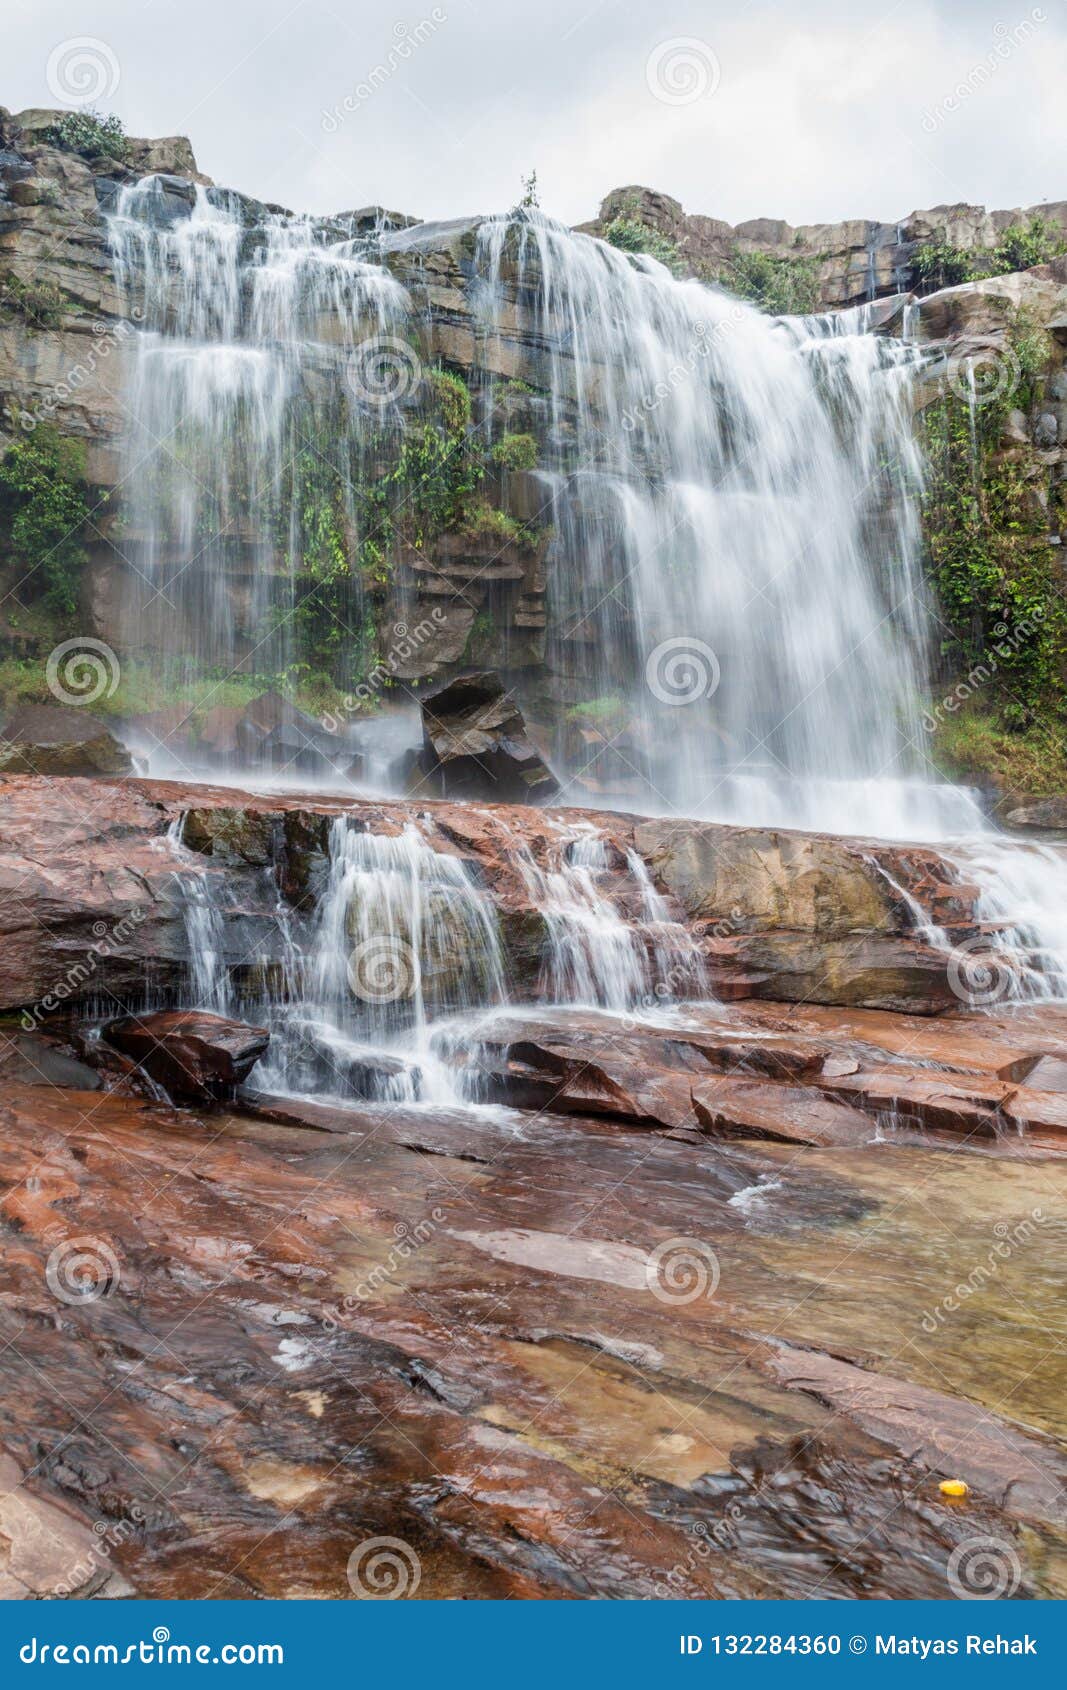 quebrada pacheco waterfall